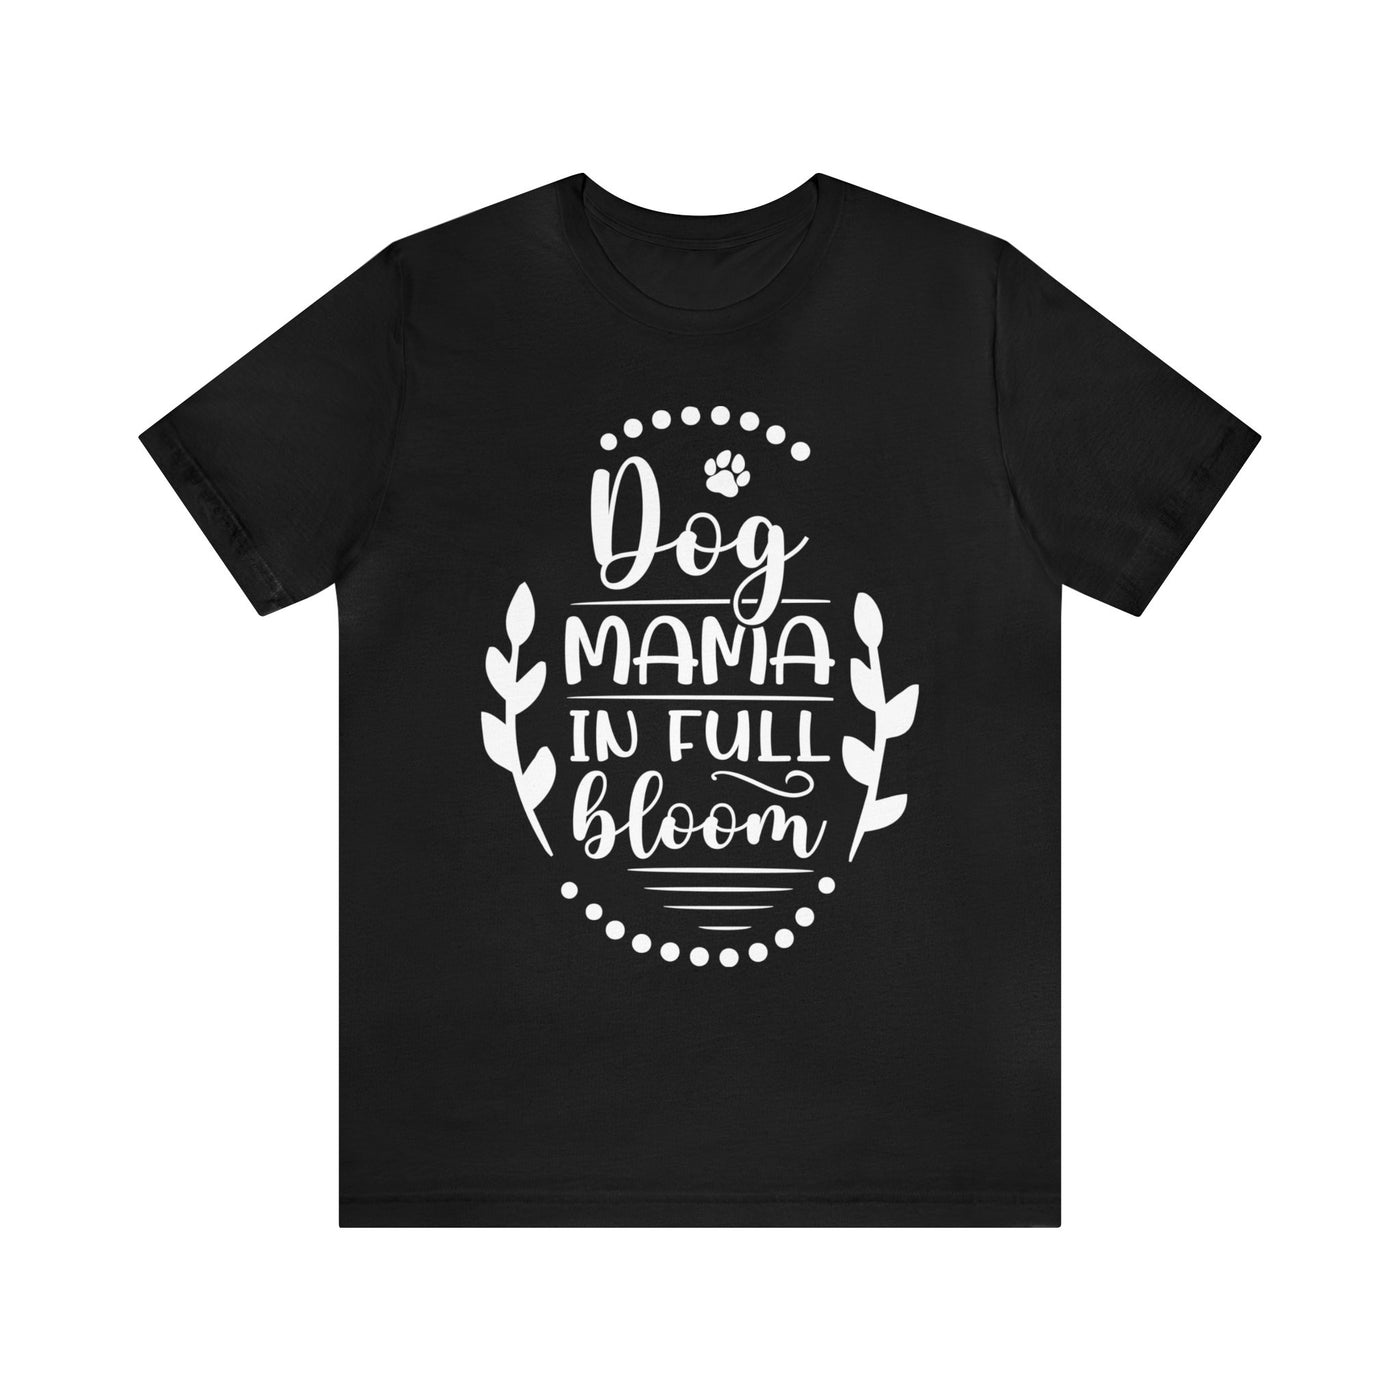 Dog Mama In Full Bloom T-Shirt